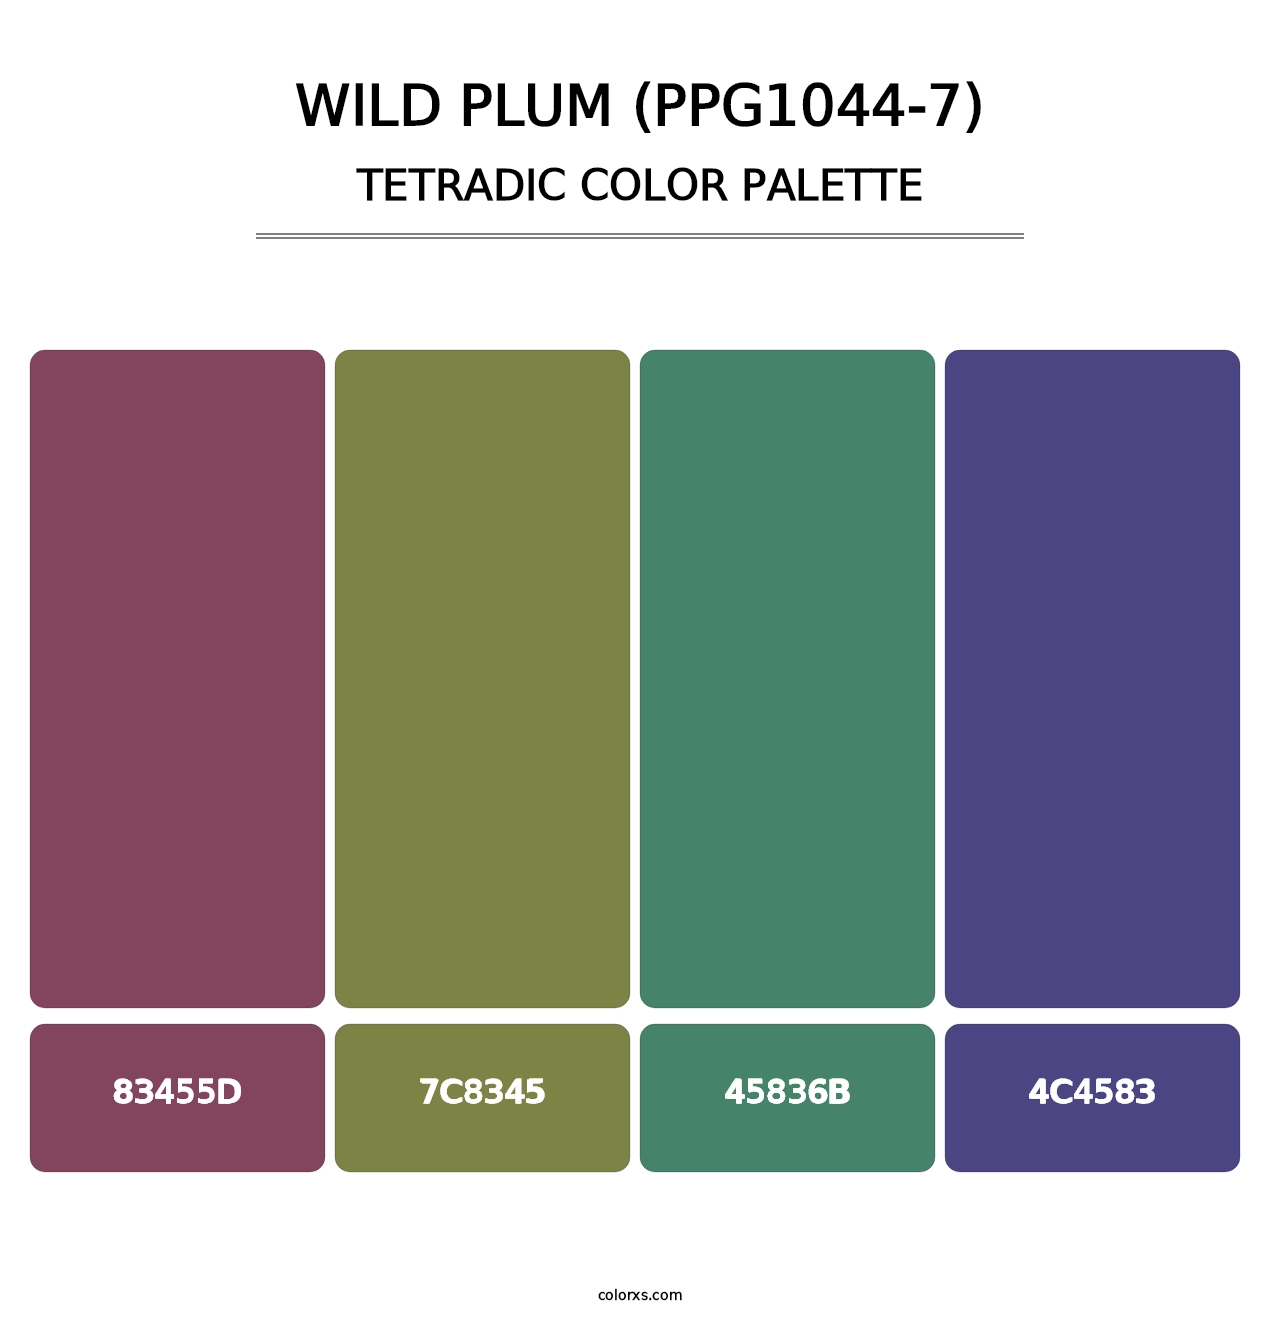 Wild Plum (PPG1044-7) - Tetradic Color Palette